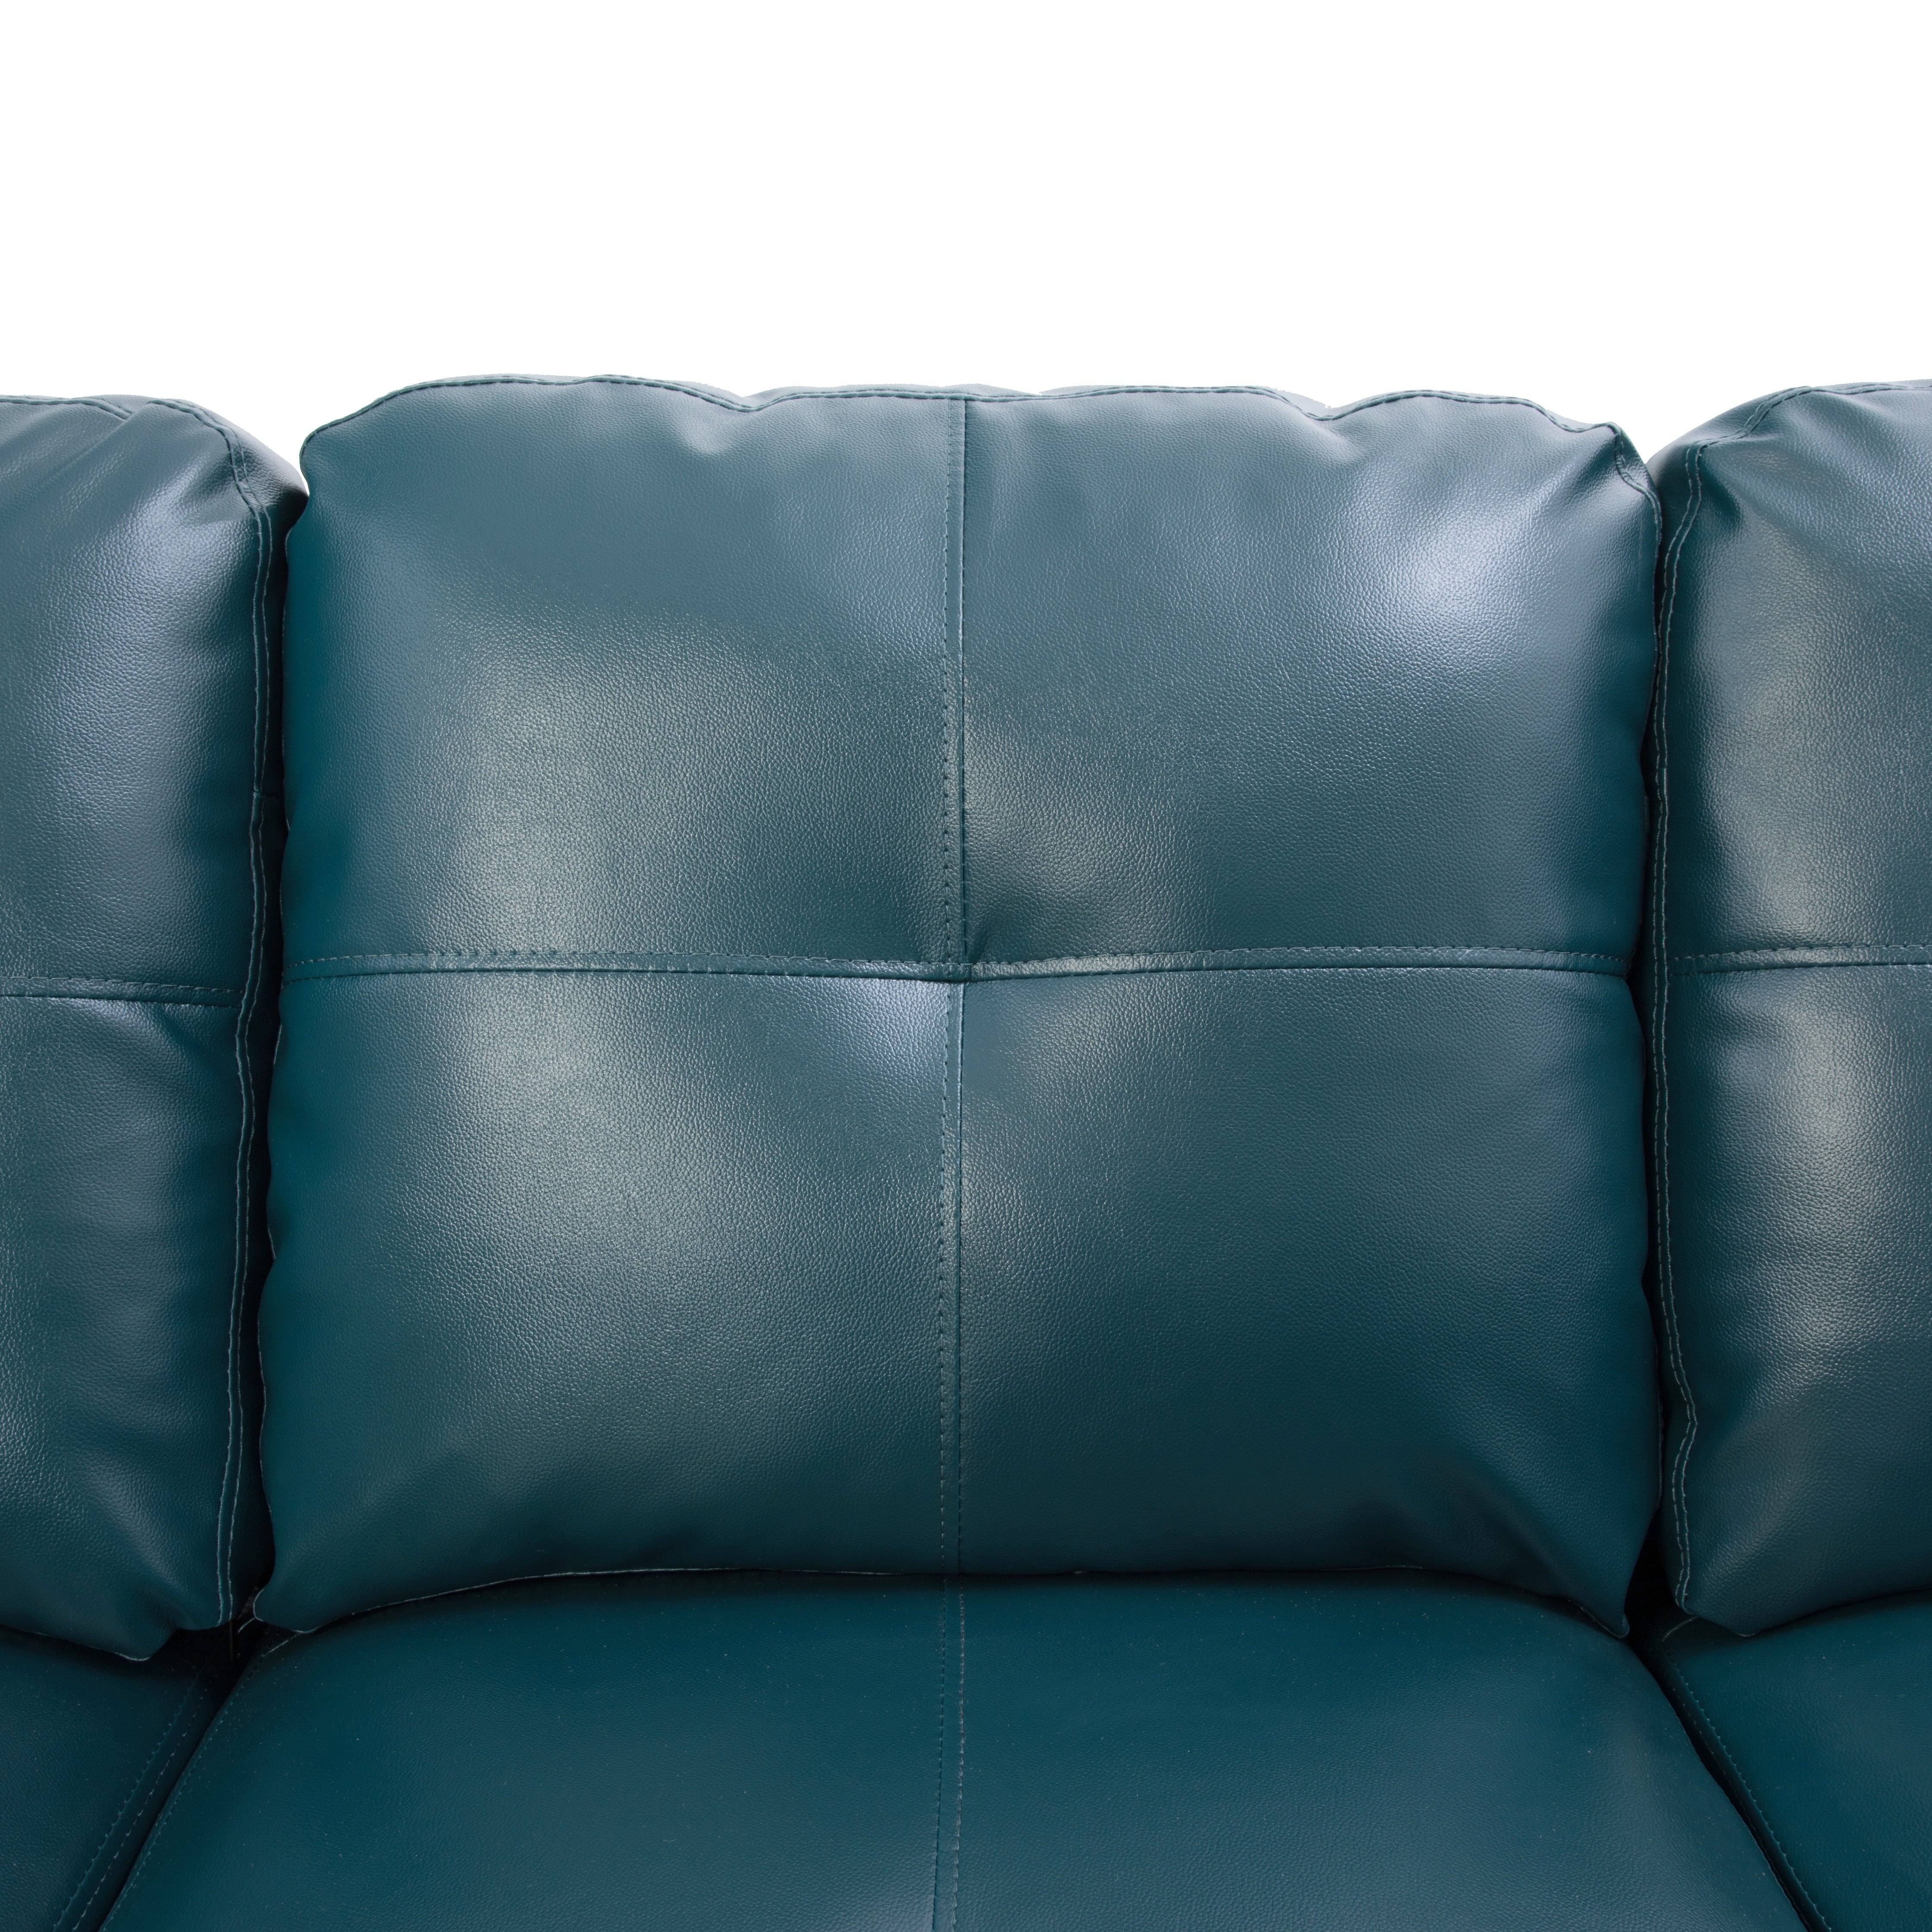 Ainehome Denim L-Shape Leather Combo Sofa Set